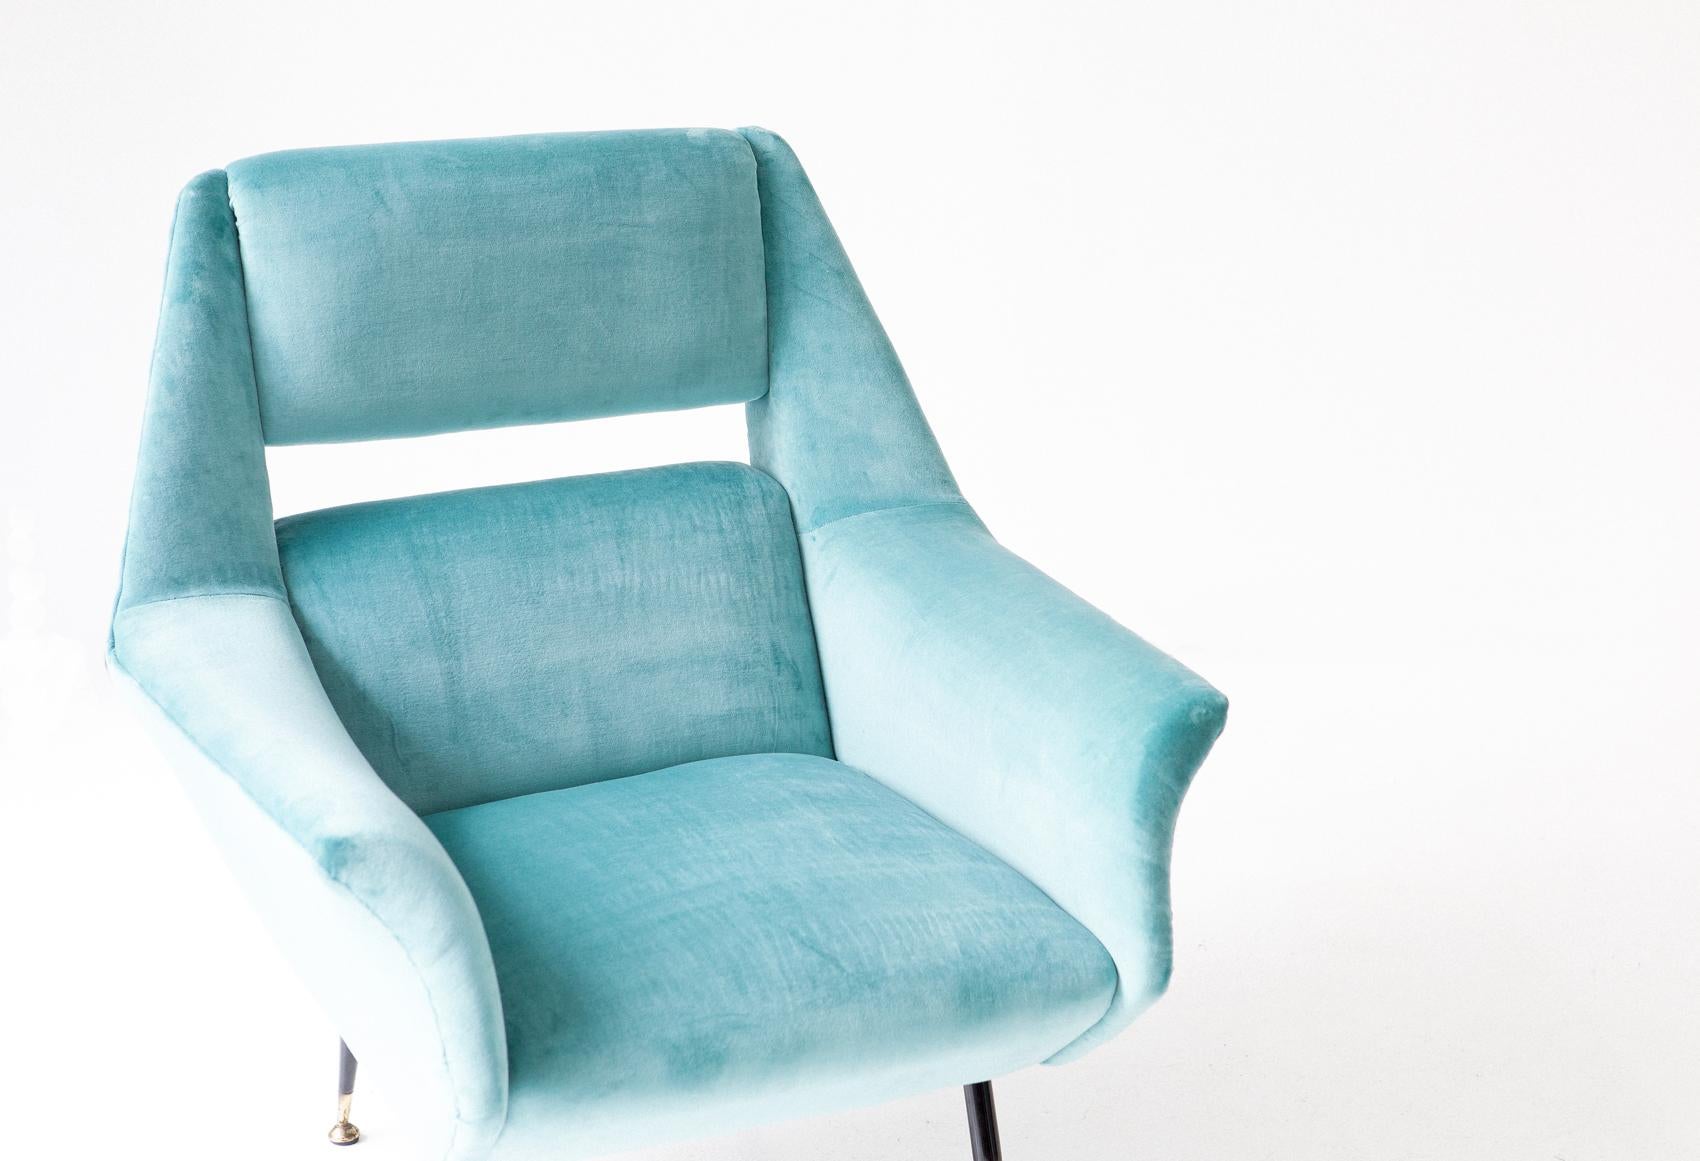 Pair of Rare Italian Turquoise Velvet Lounge Chairs by Gigi Radice for Minotti 1